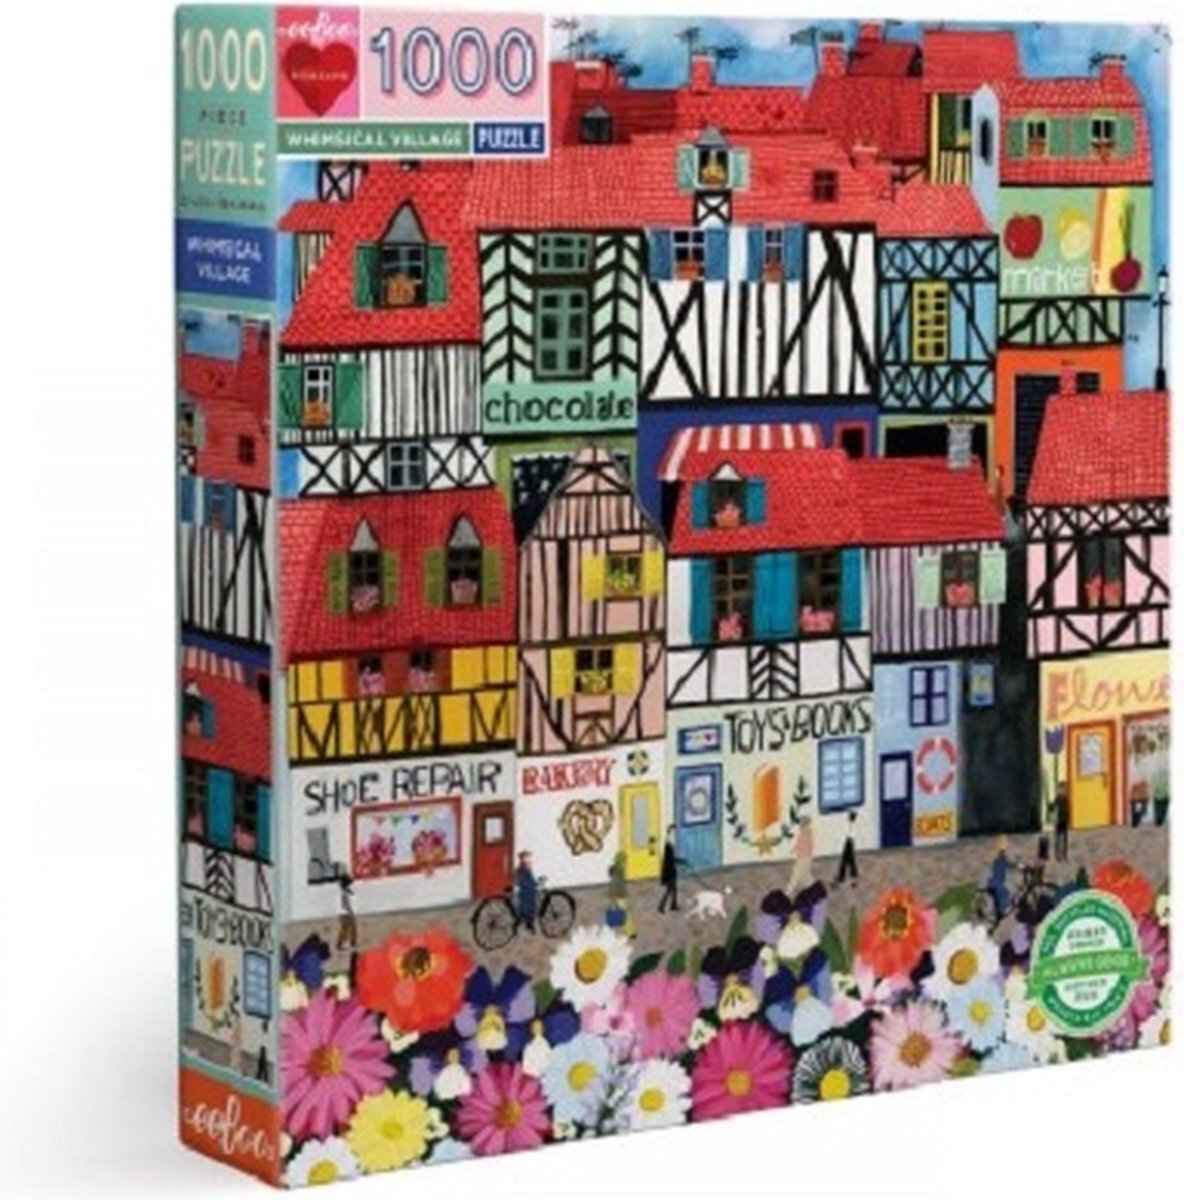 Eeboo puzzel Whimsical Village 1000